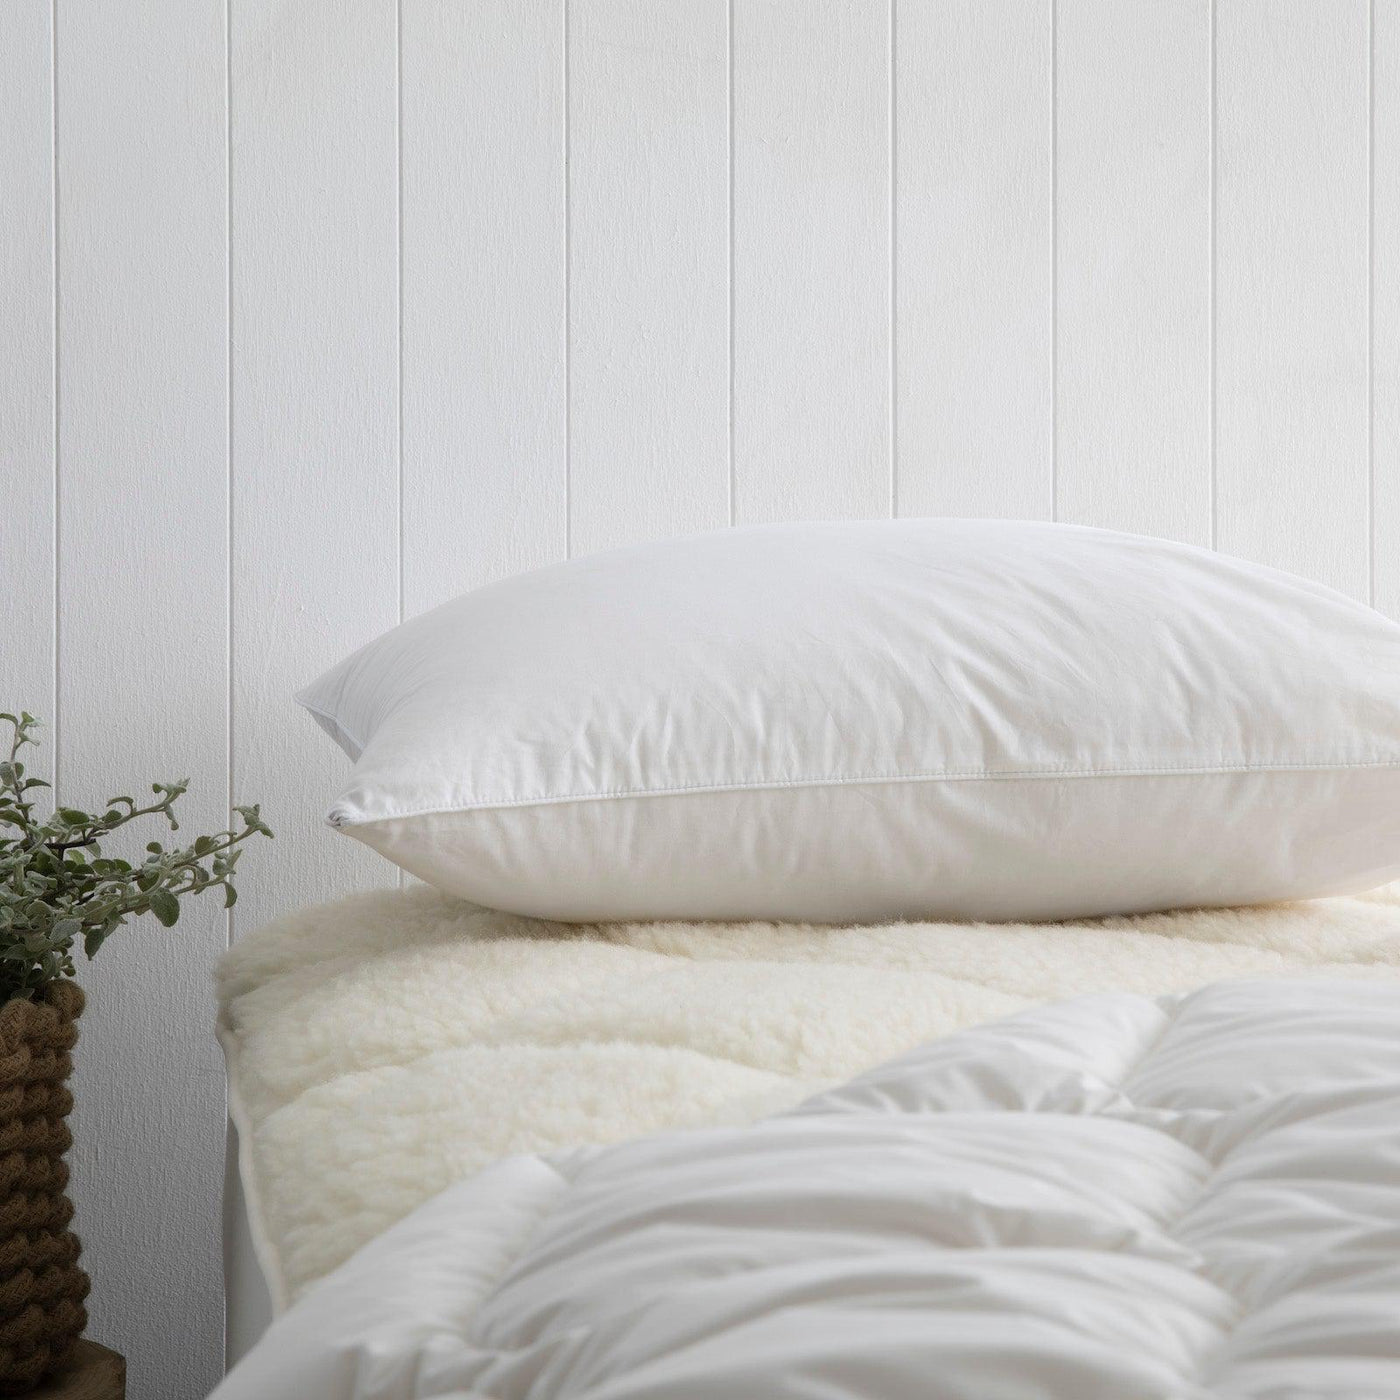 Eco Australian Wool Pillow-Pillows-LUXOTIC